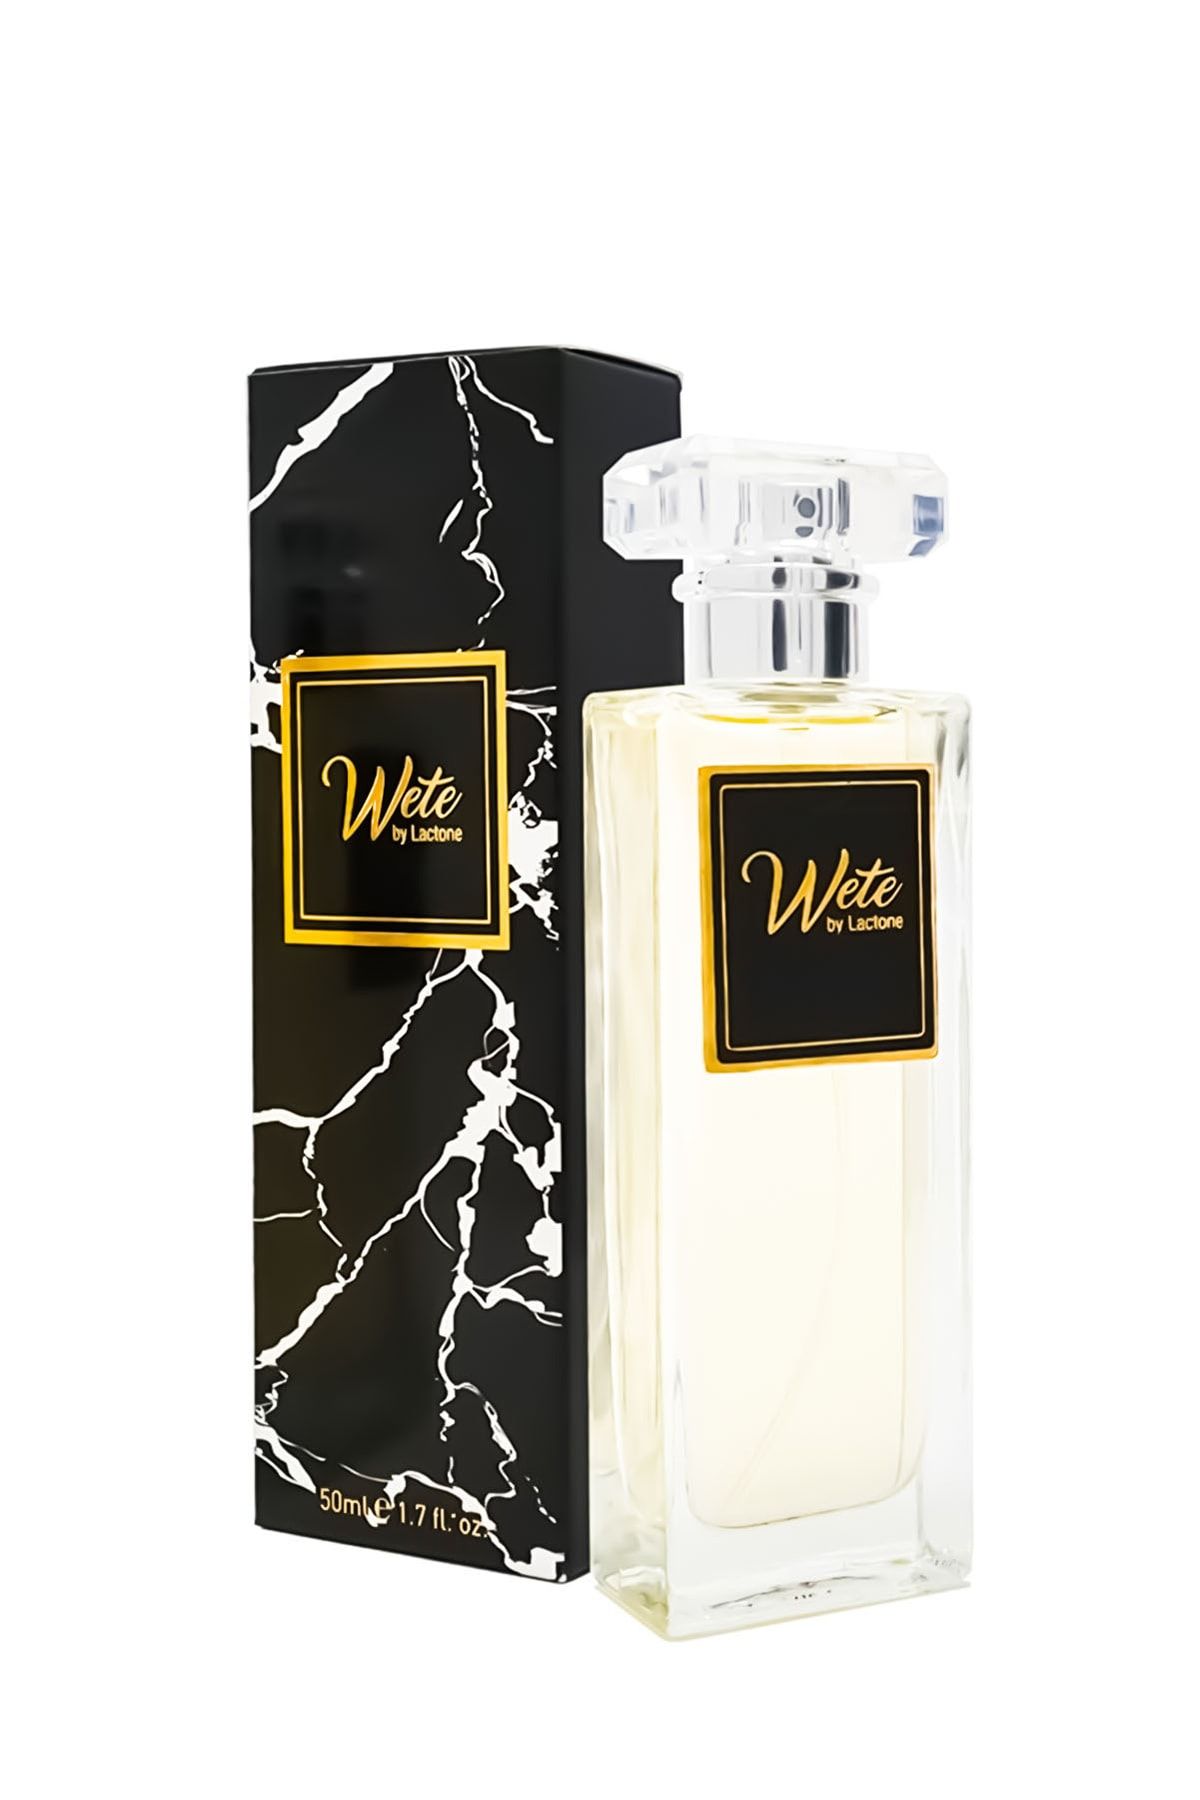 L'ACTONE Wete Erkek Cegoist Parfümü Wl-570 50 ml